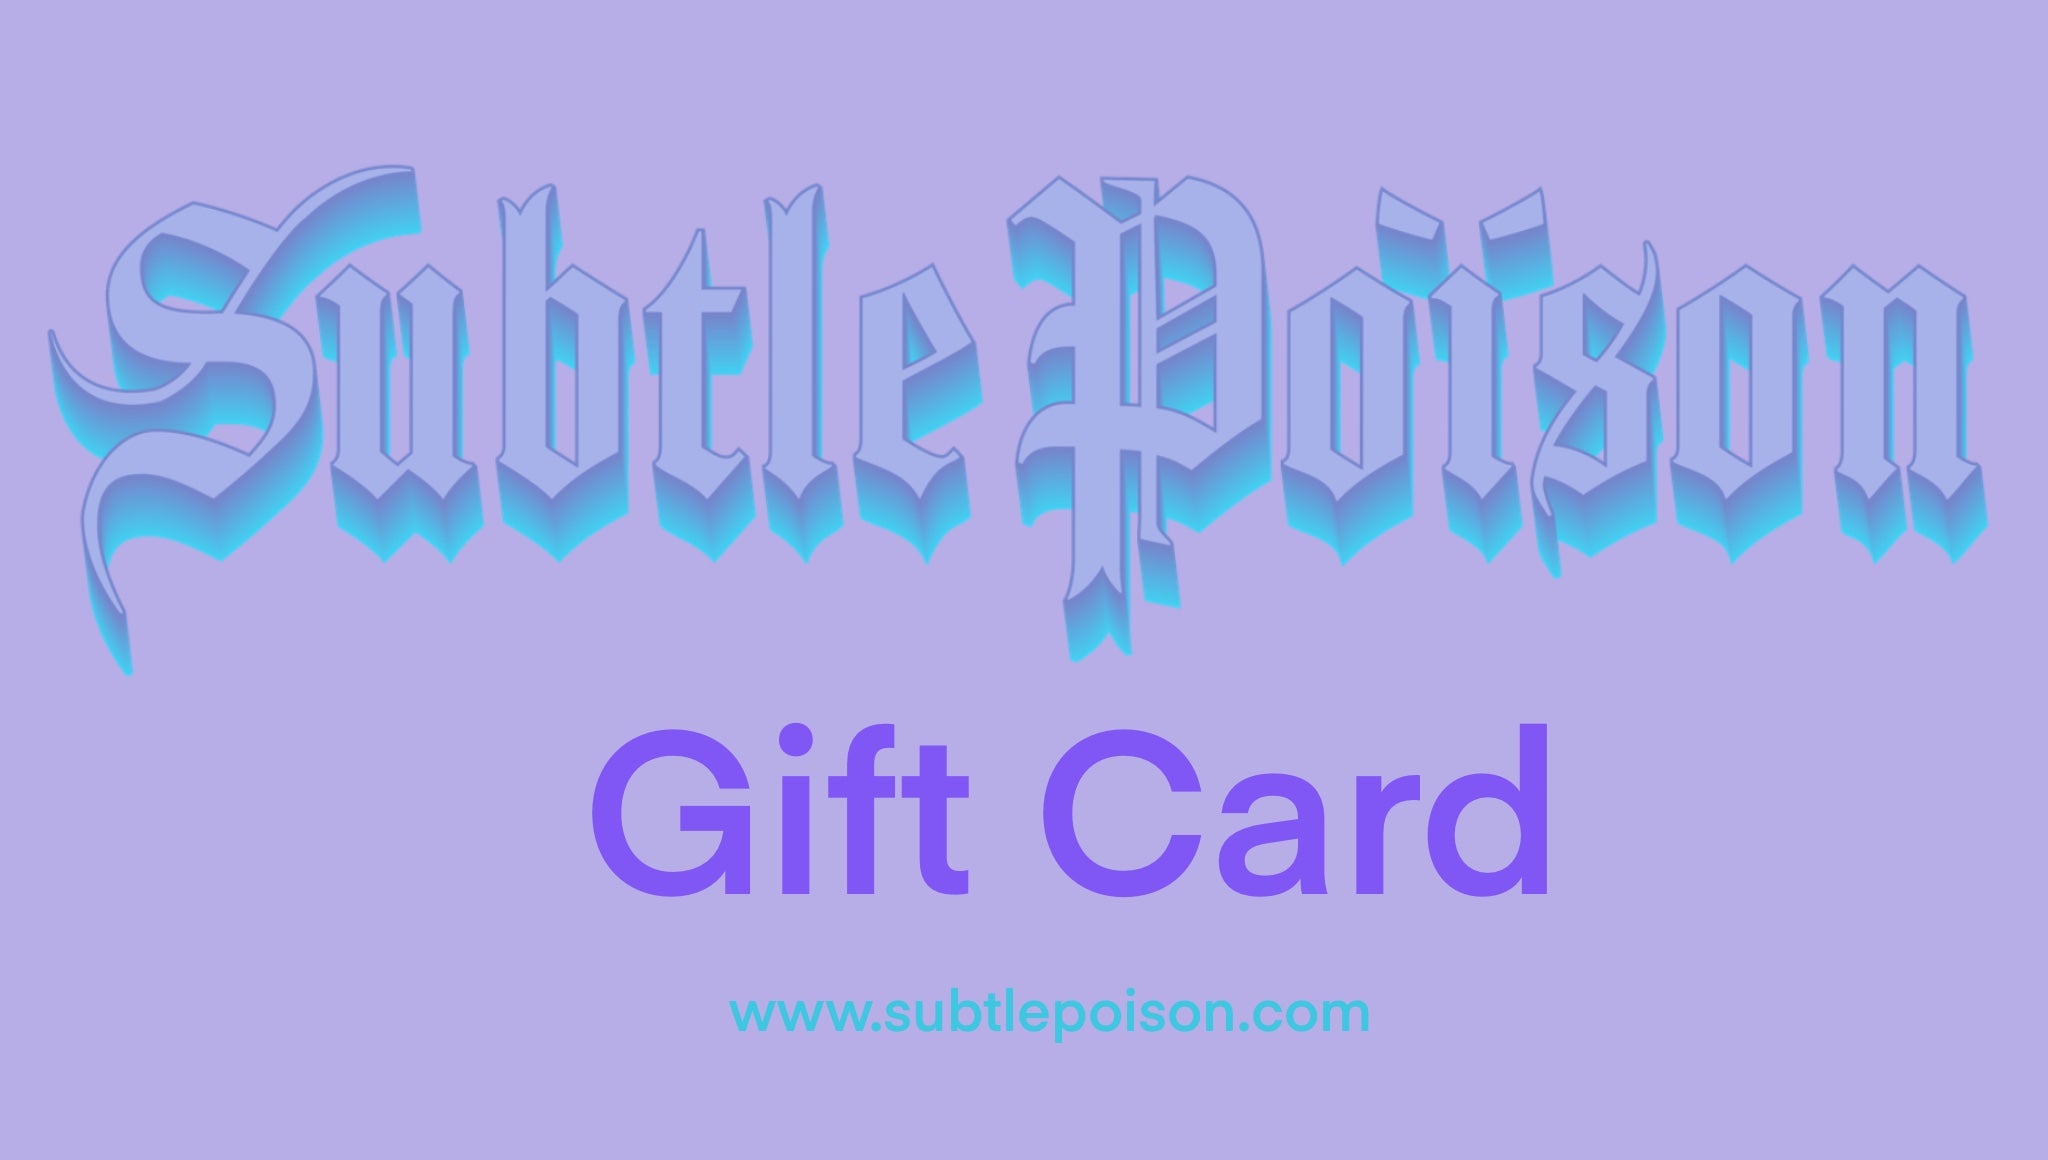 Subtle Poison Gift Card